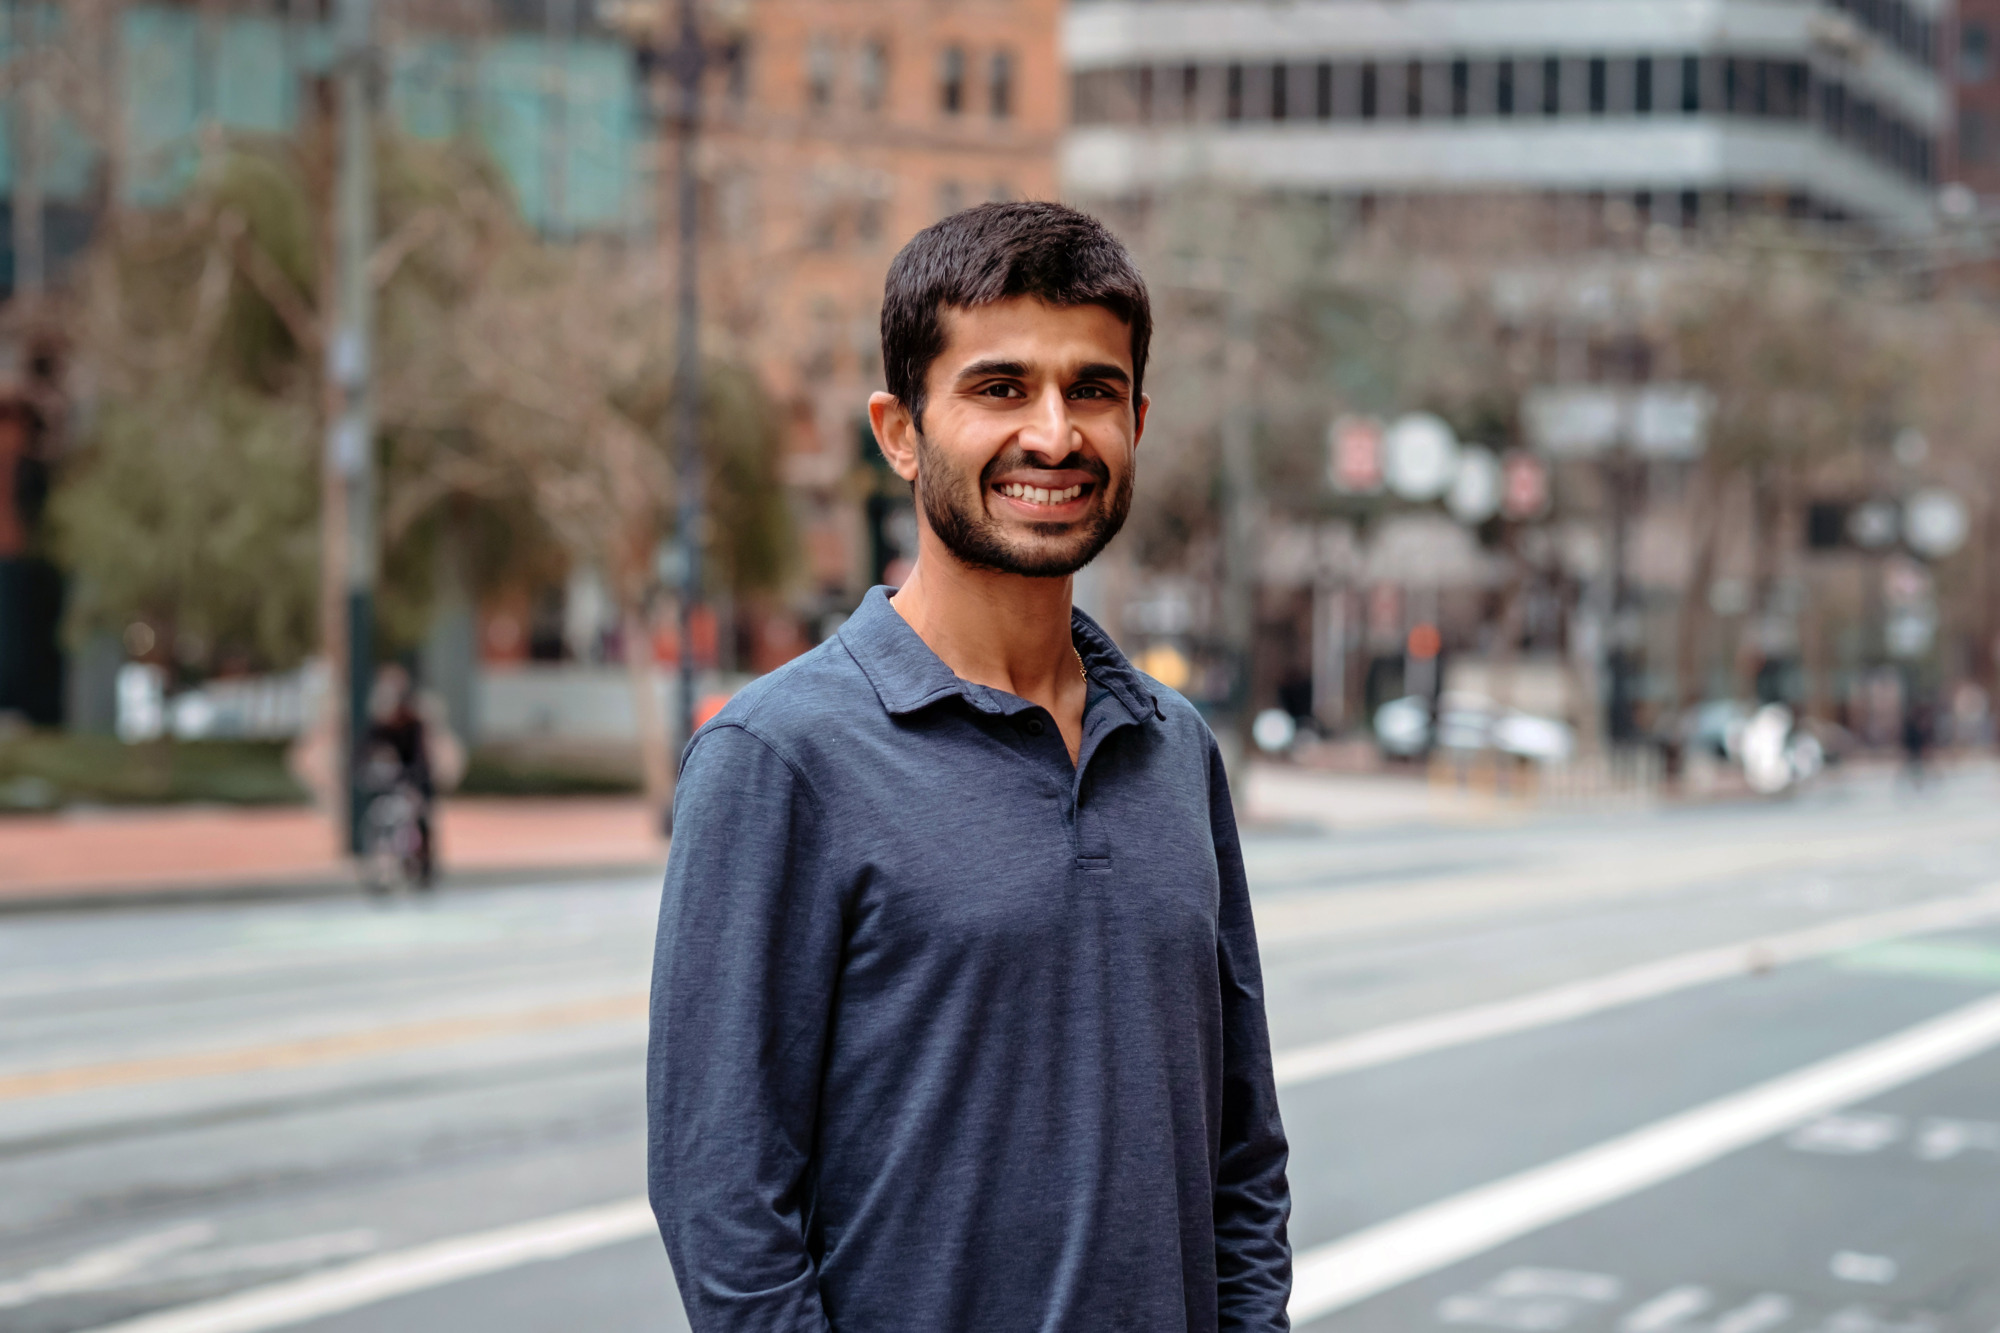 Staff member Rohit Naimpally wearing a grey shirt posing on a San Francisco street.